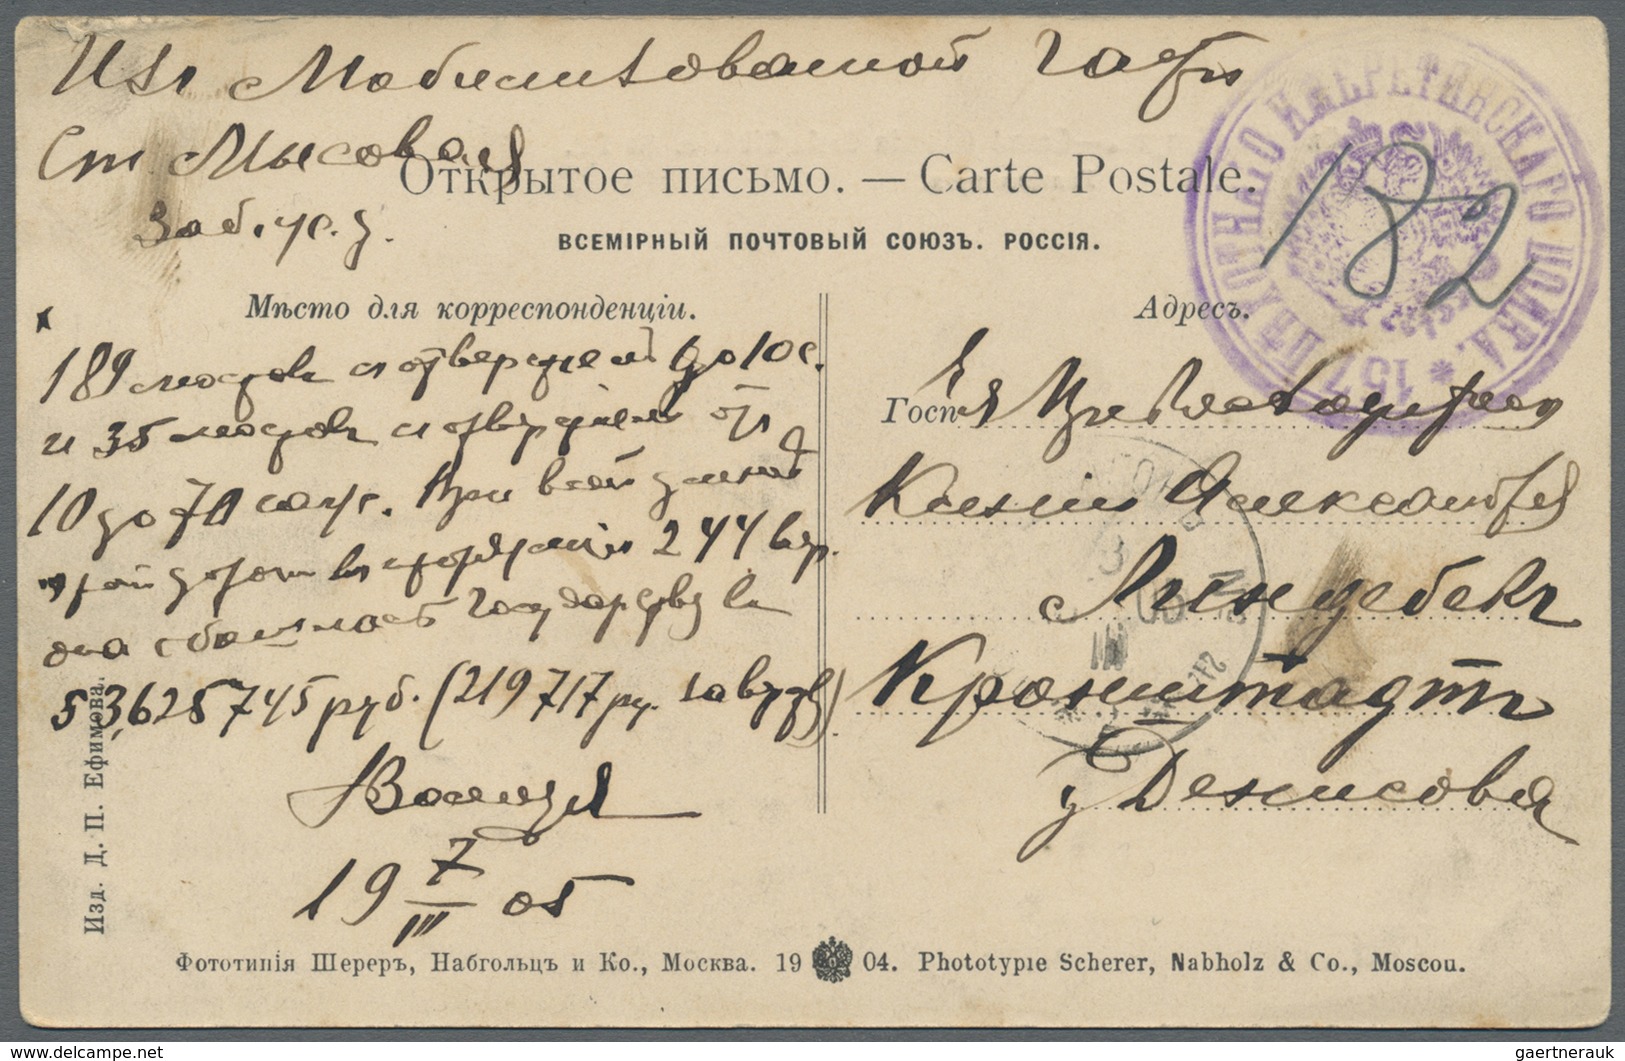 Russland - Militärpost / Feldpost: 1904/05, Russo-Japanese war, ppc used as field post cards (6) inc